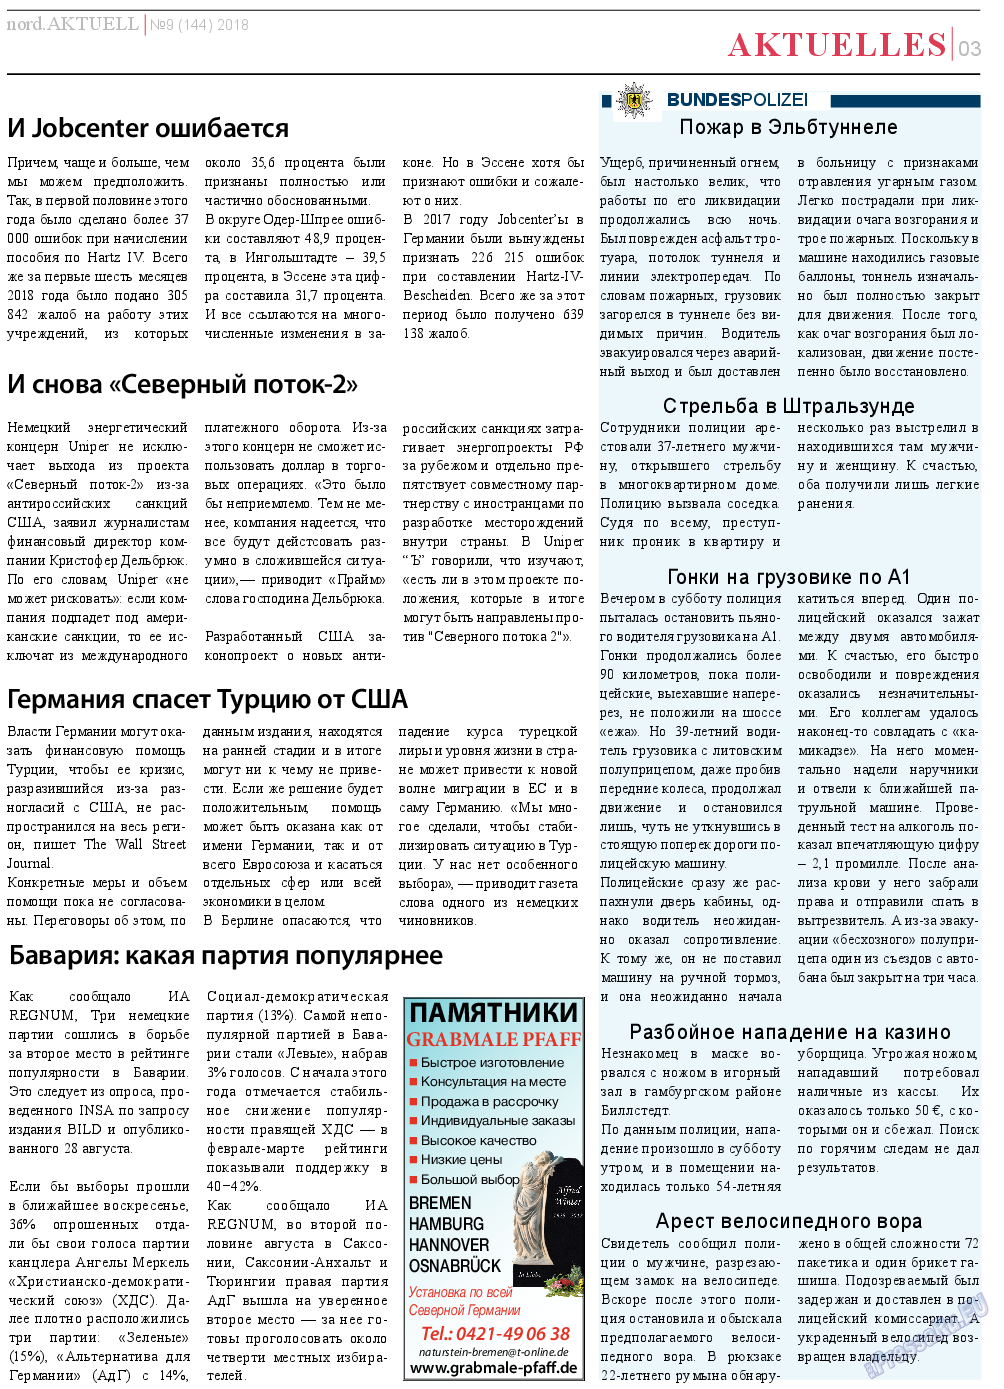 nord.Aktuell, газета. 2018 №9 стр.3